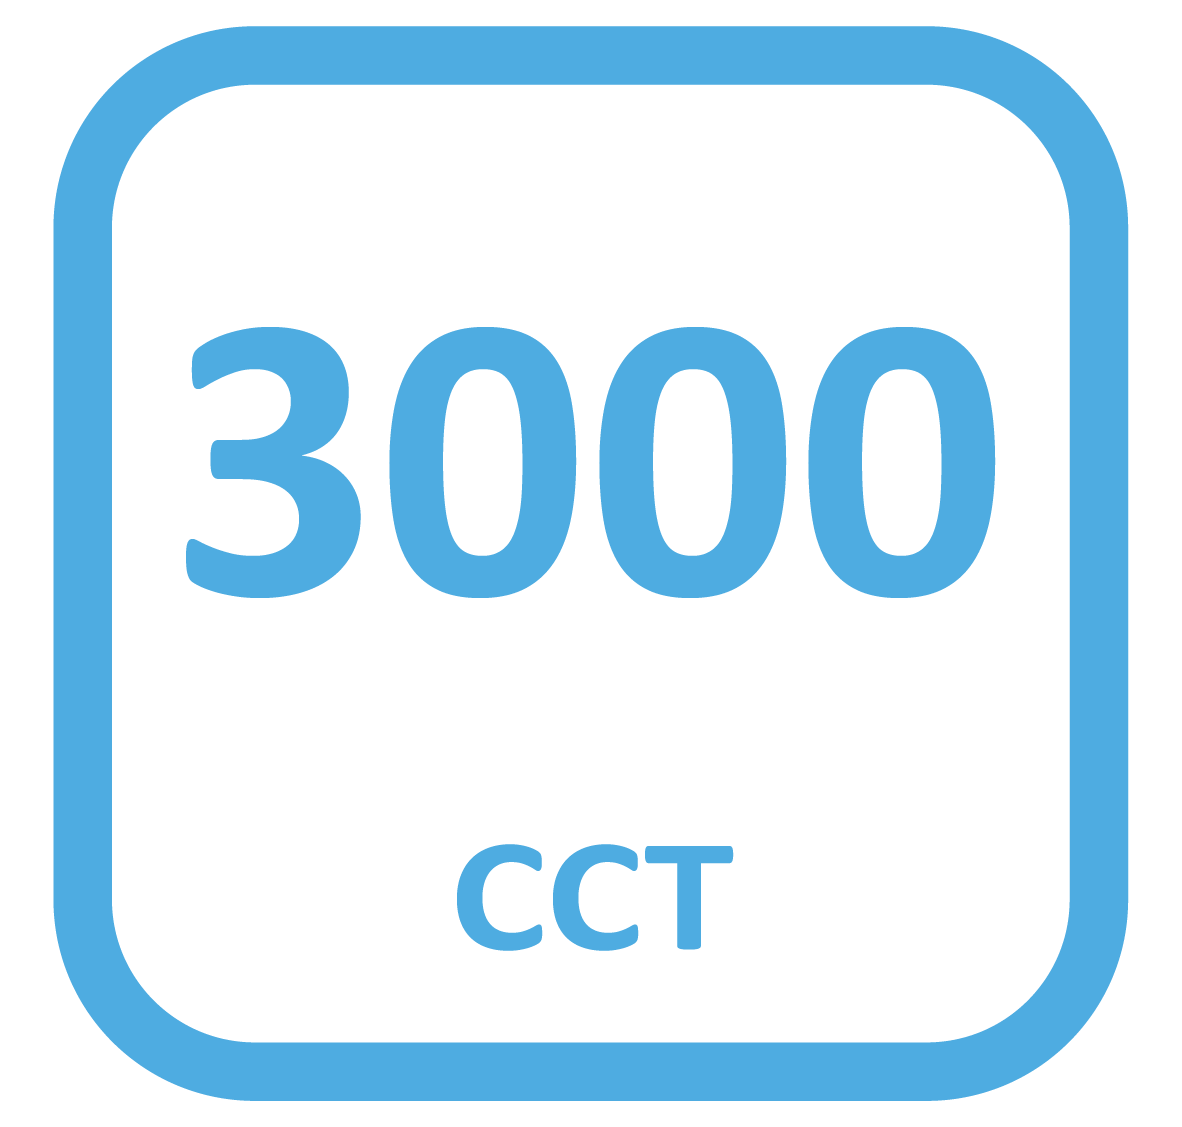 3000 CCT